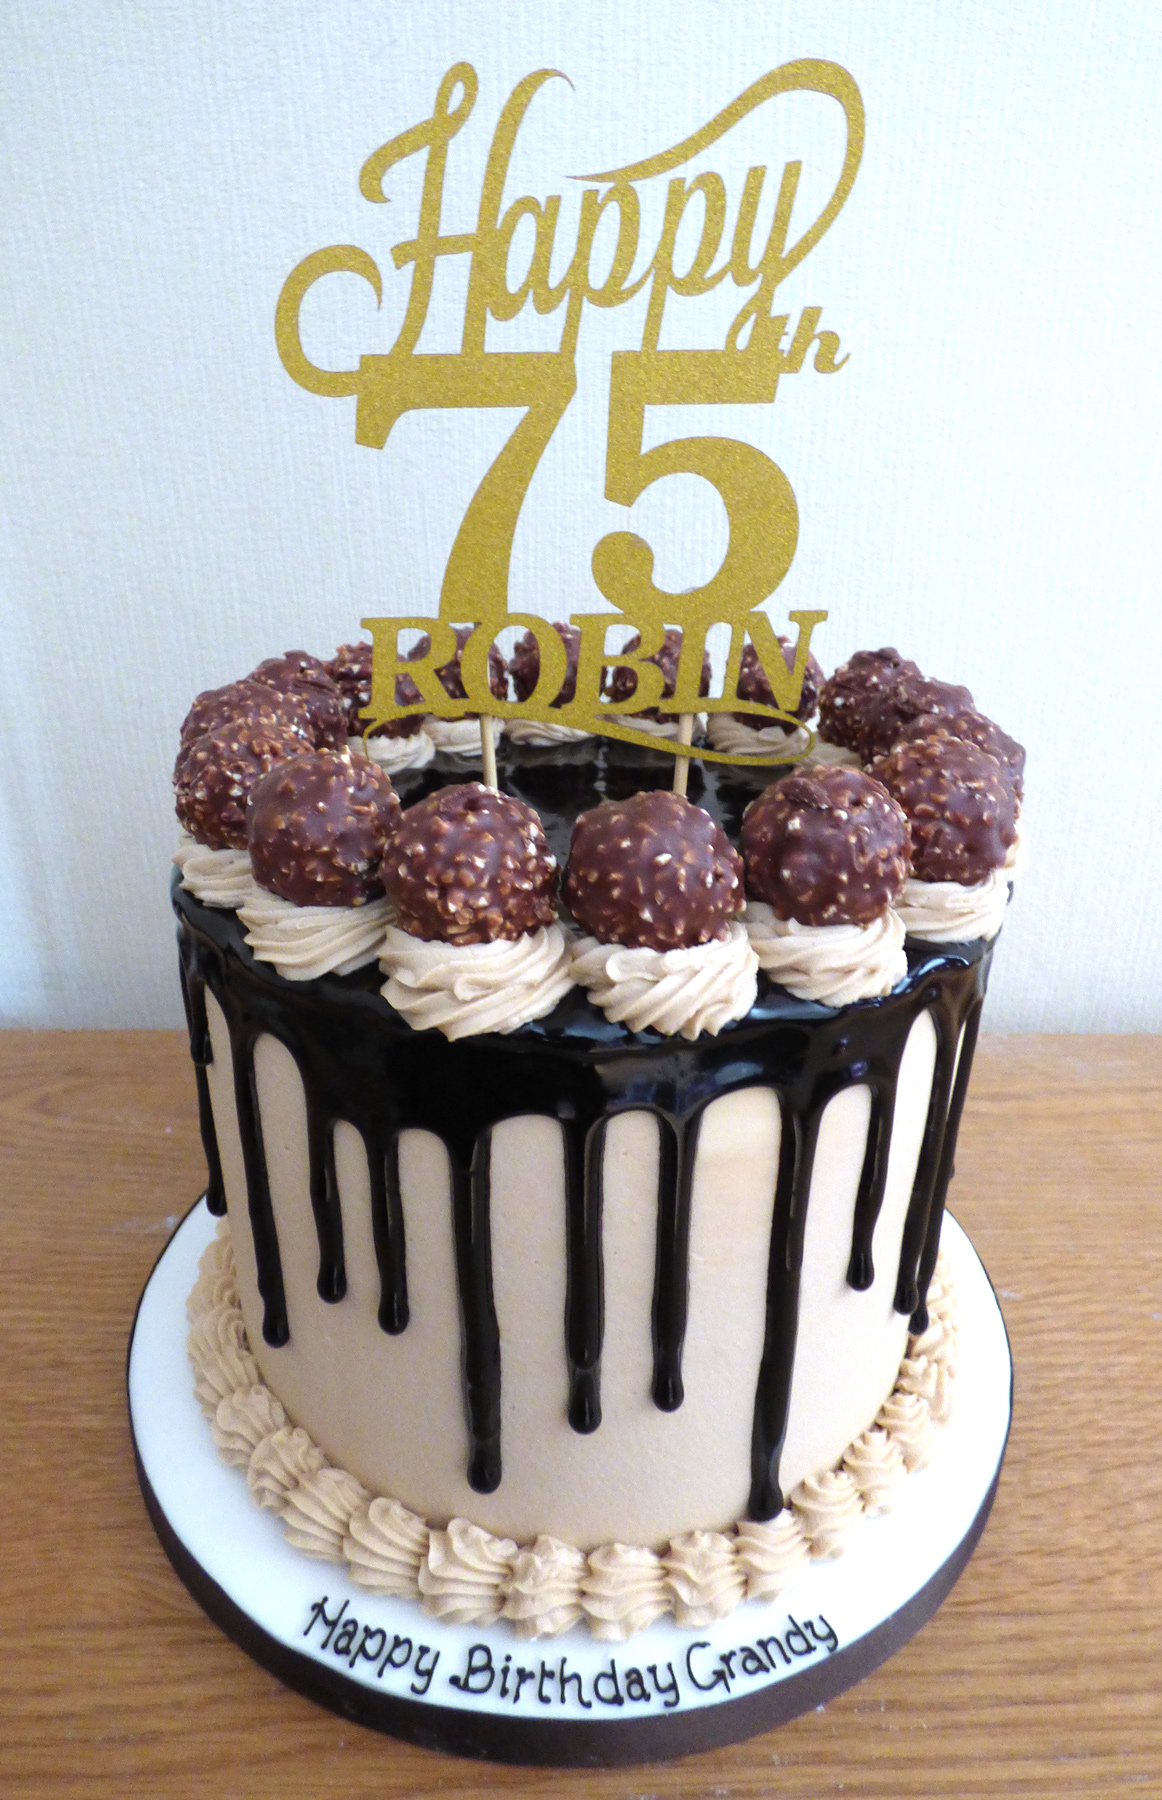 Ferrero Rocher chocolate cake (Eggless) - Ovenfresh